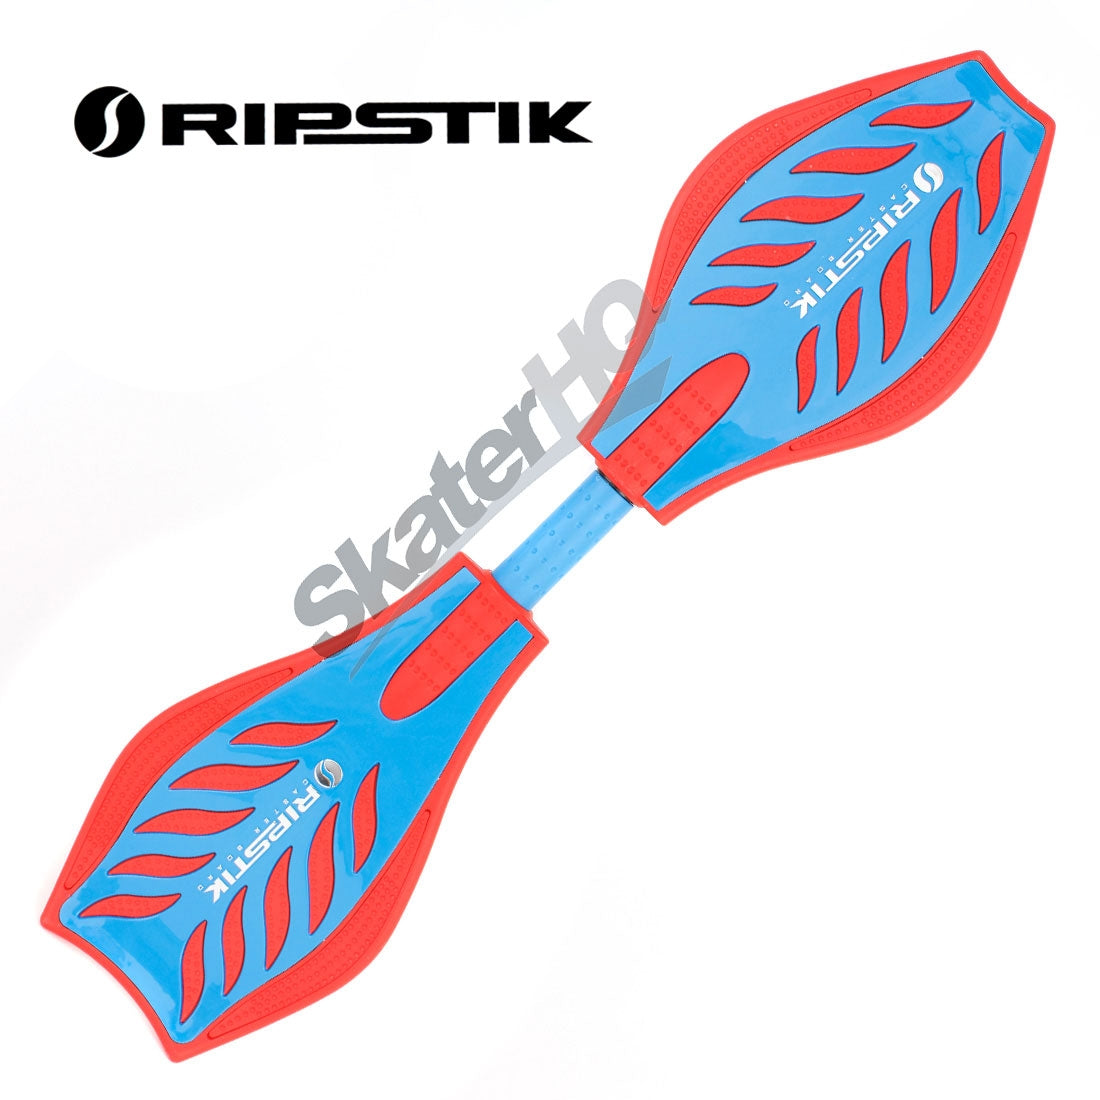 Razor RipStik Brights - Blue/Red Other Fun Toys